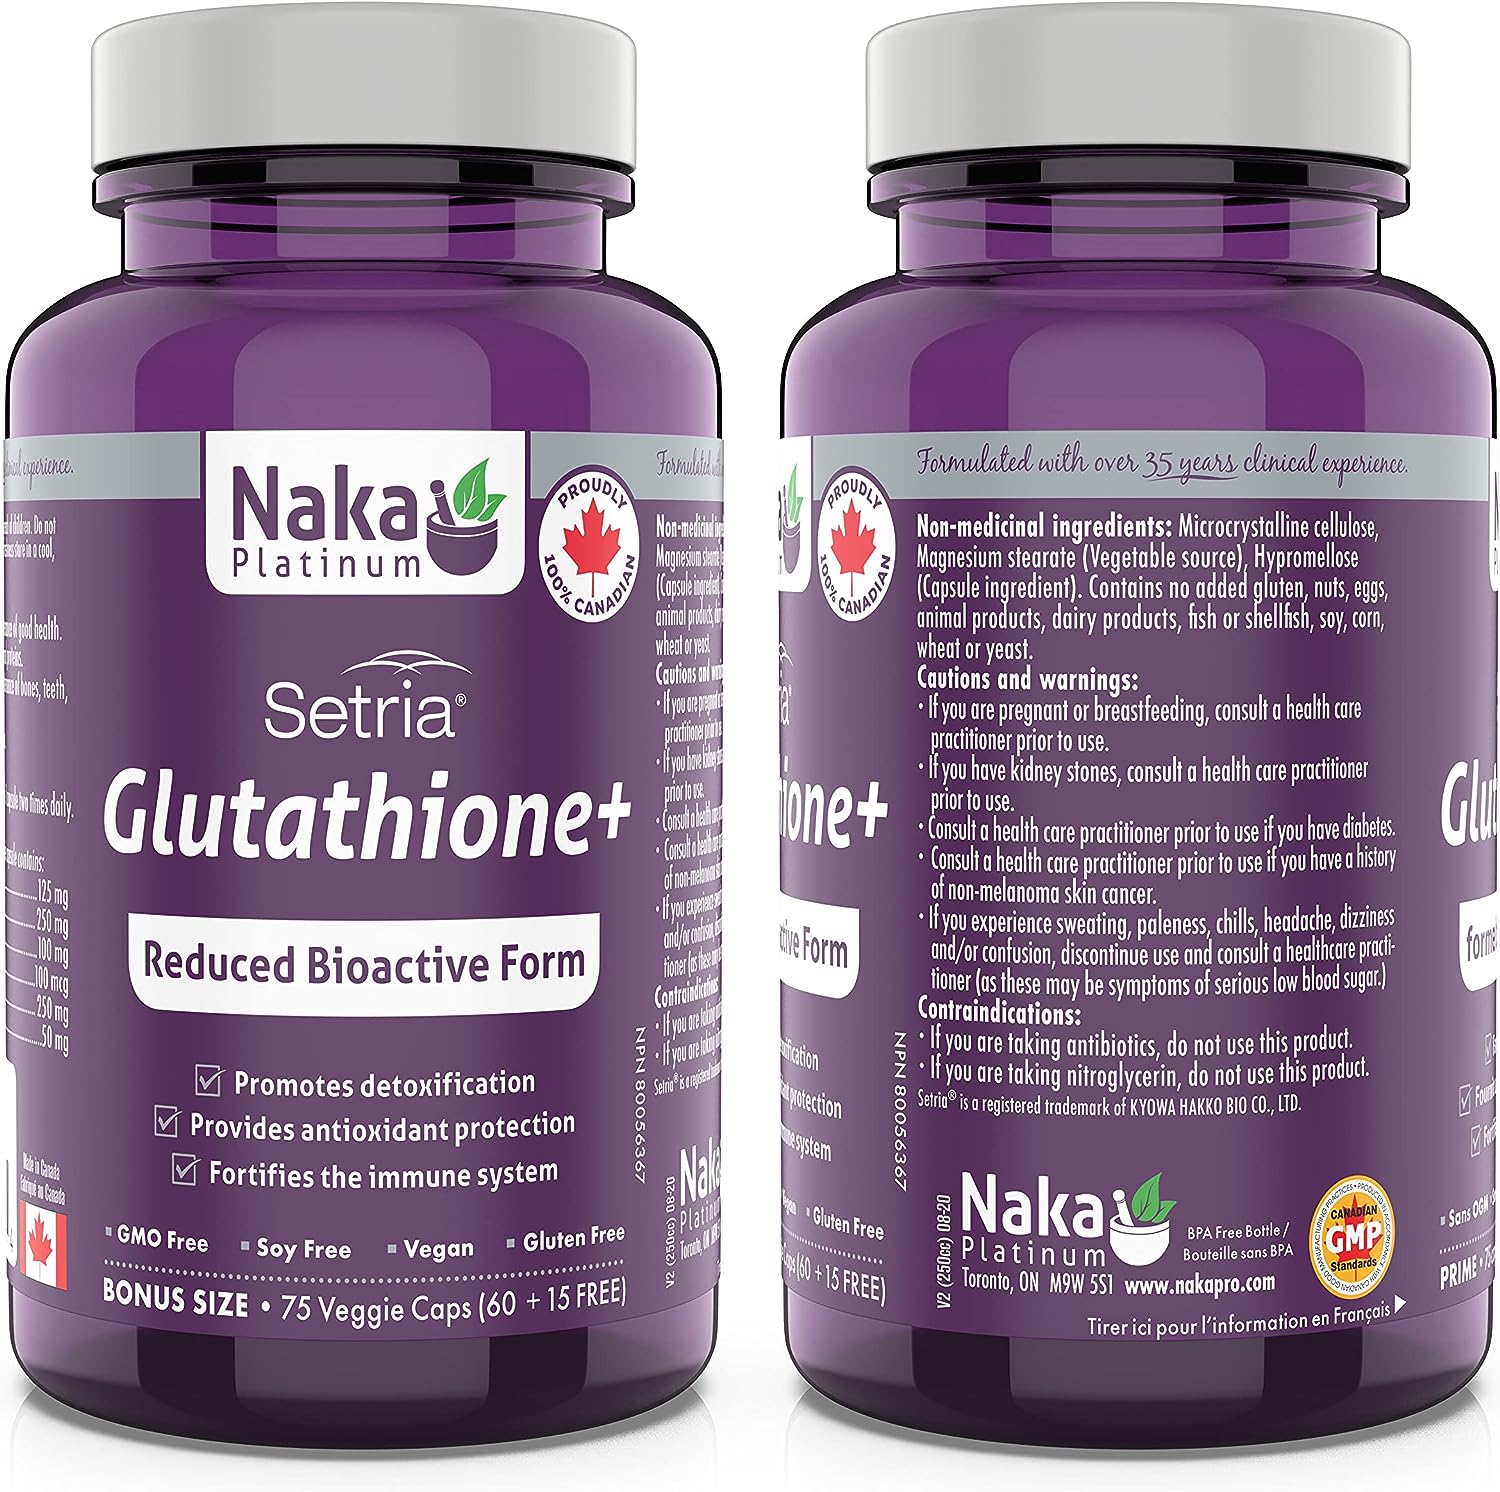 Naka Platinum Setria glutathione+ reduced Bioactive Form (75 Vcaps)